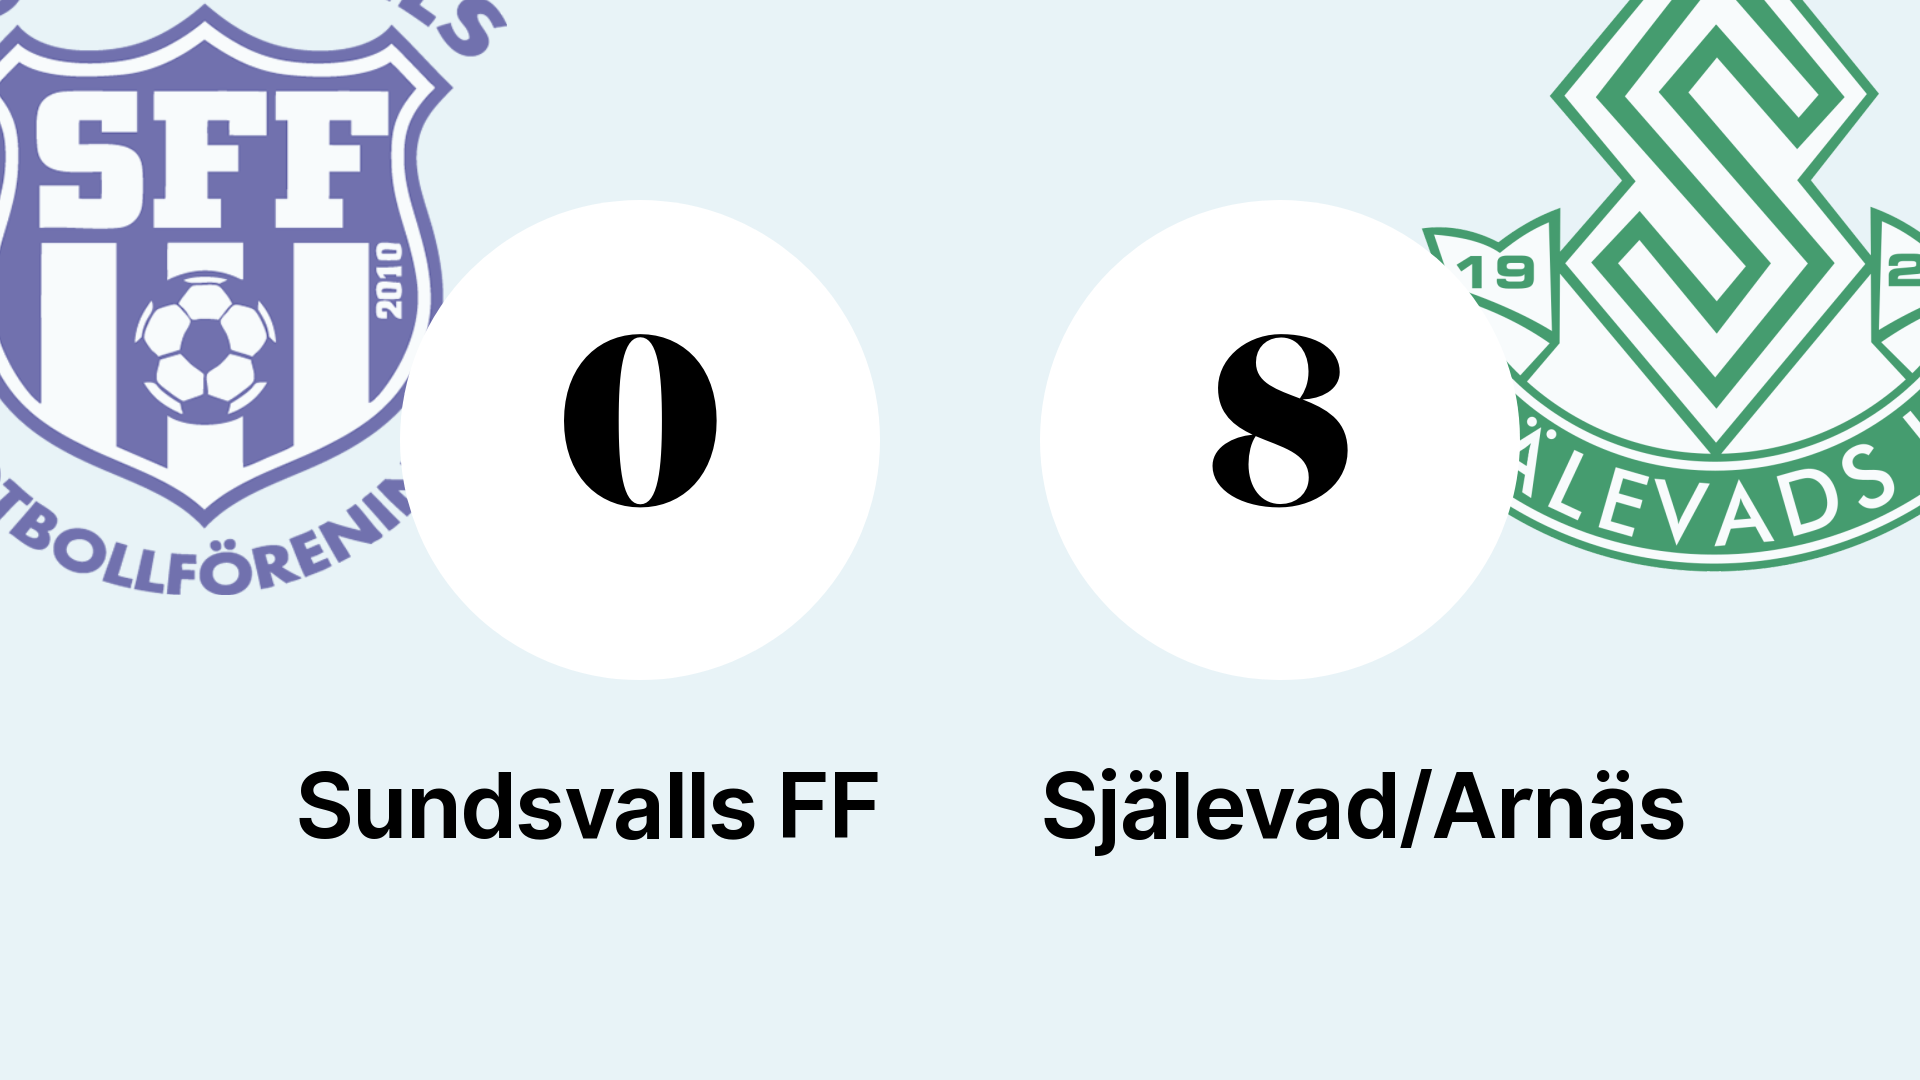 Själevad/Arnäs Dominates Sundsvalls FF with 8-0 Victory